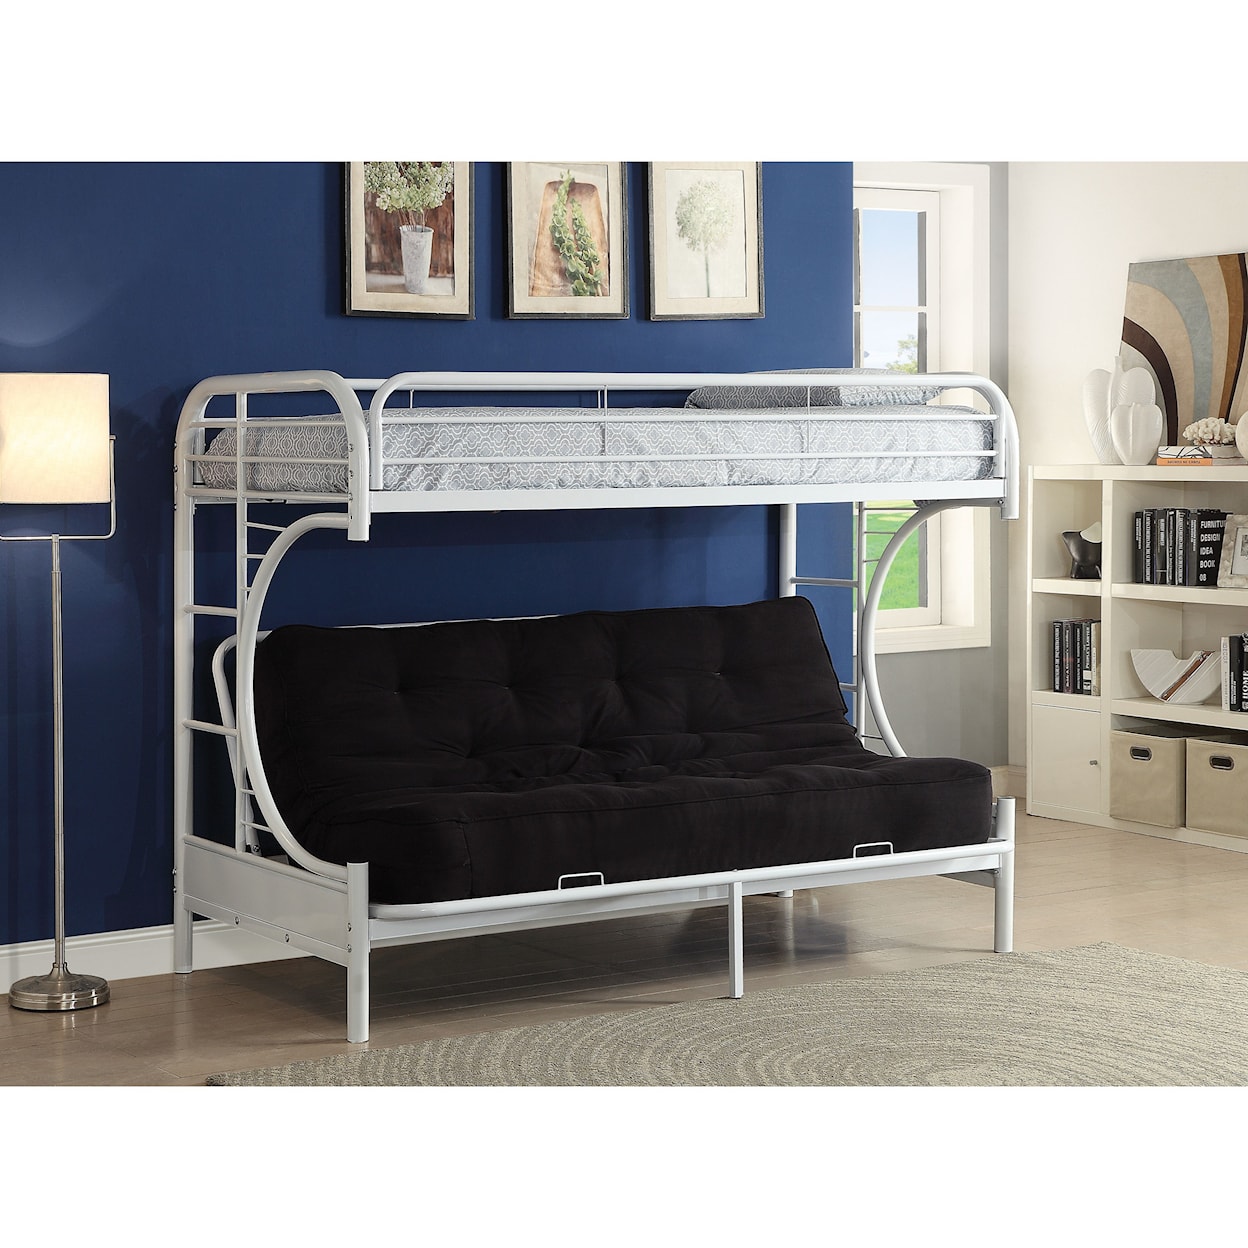 Acme Furniture Eclipse Twin XL/Queen Futon Bunk Bed